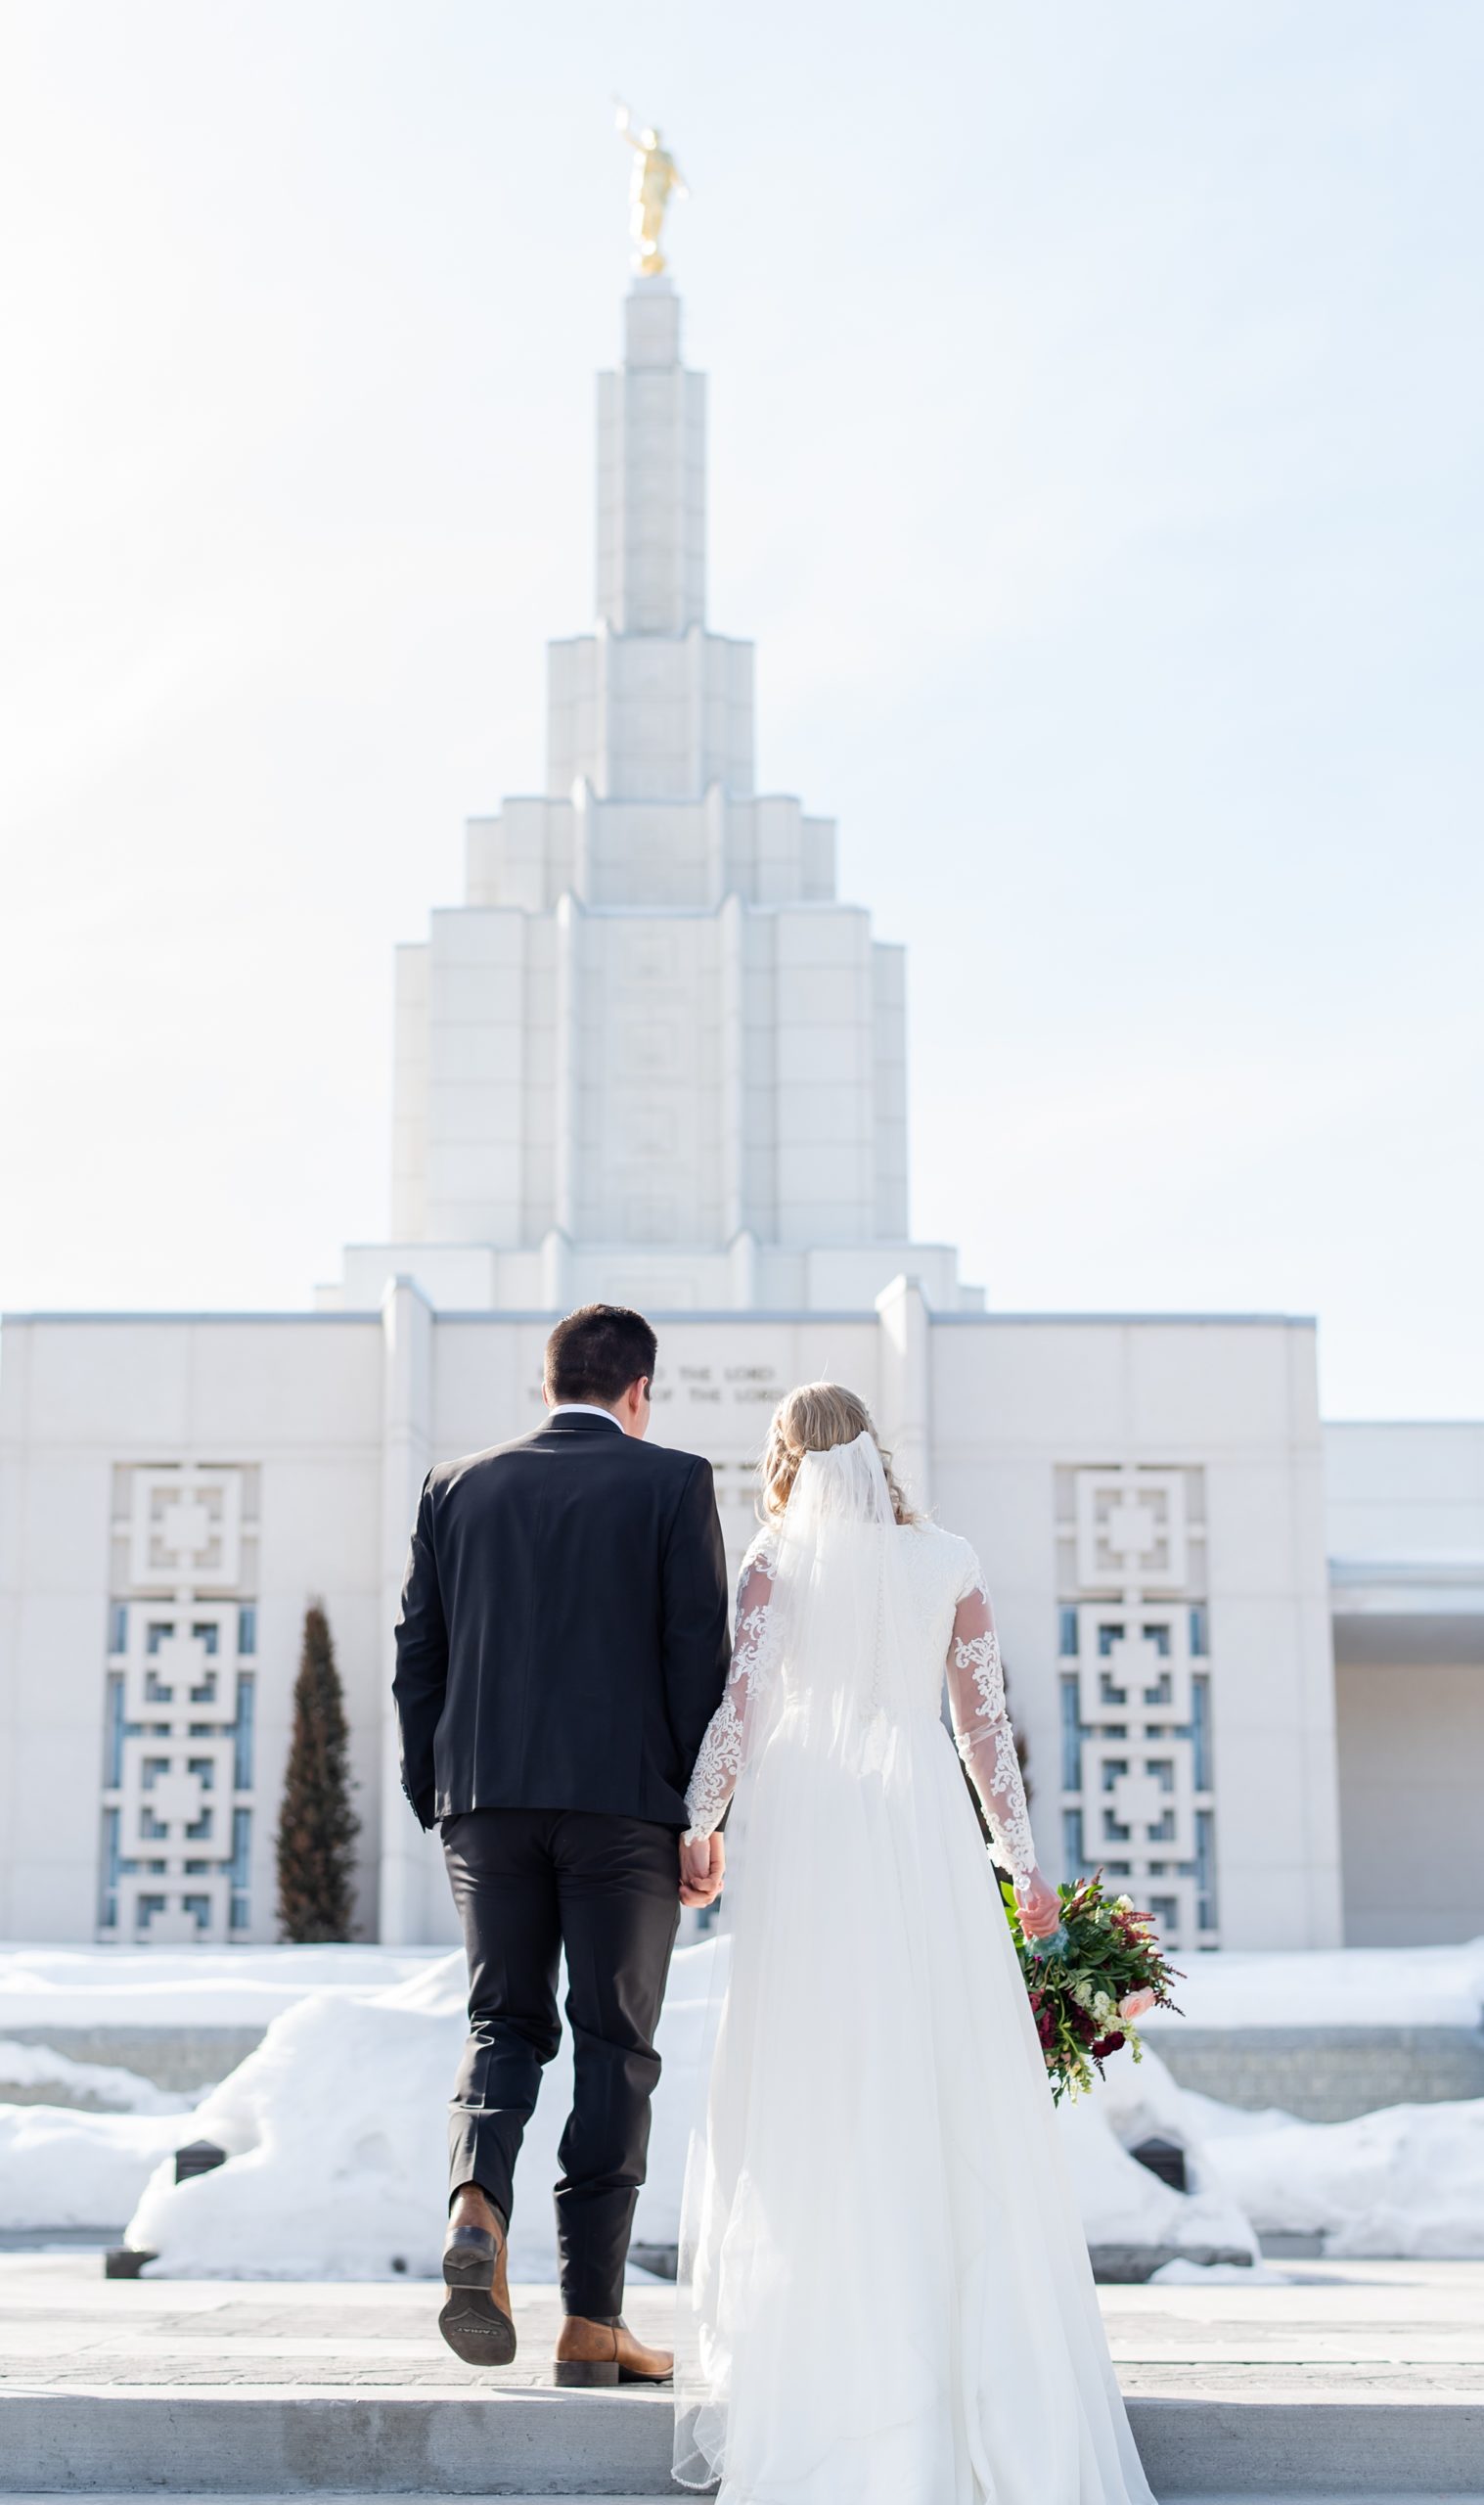 Idaho Falls Temple Winter wedding